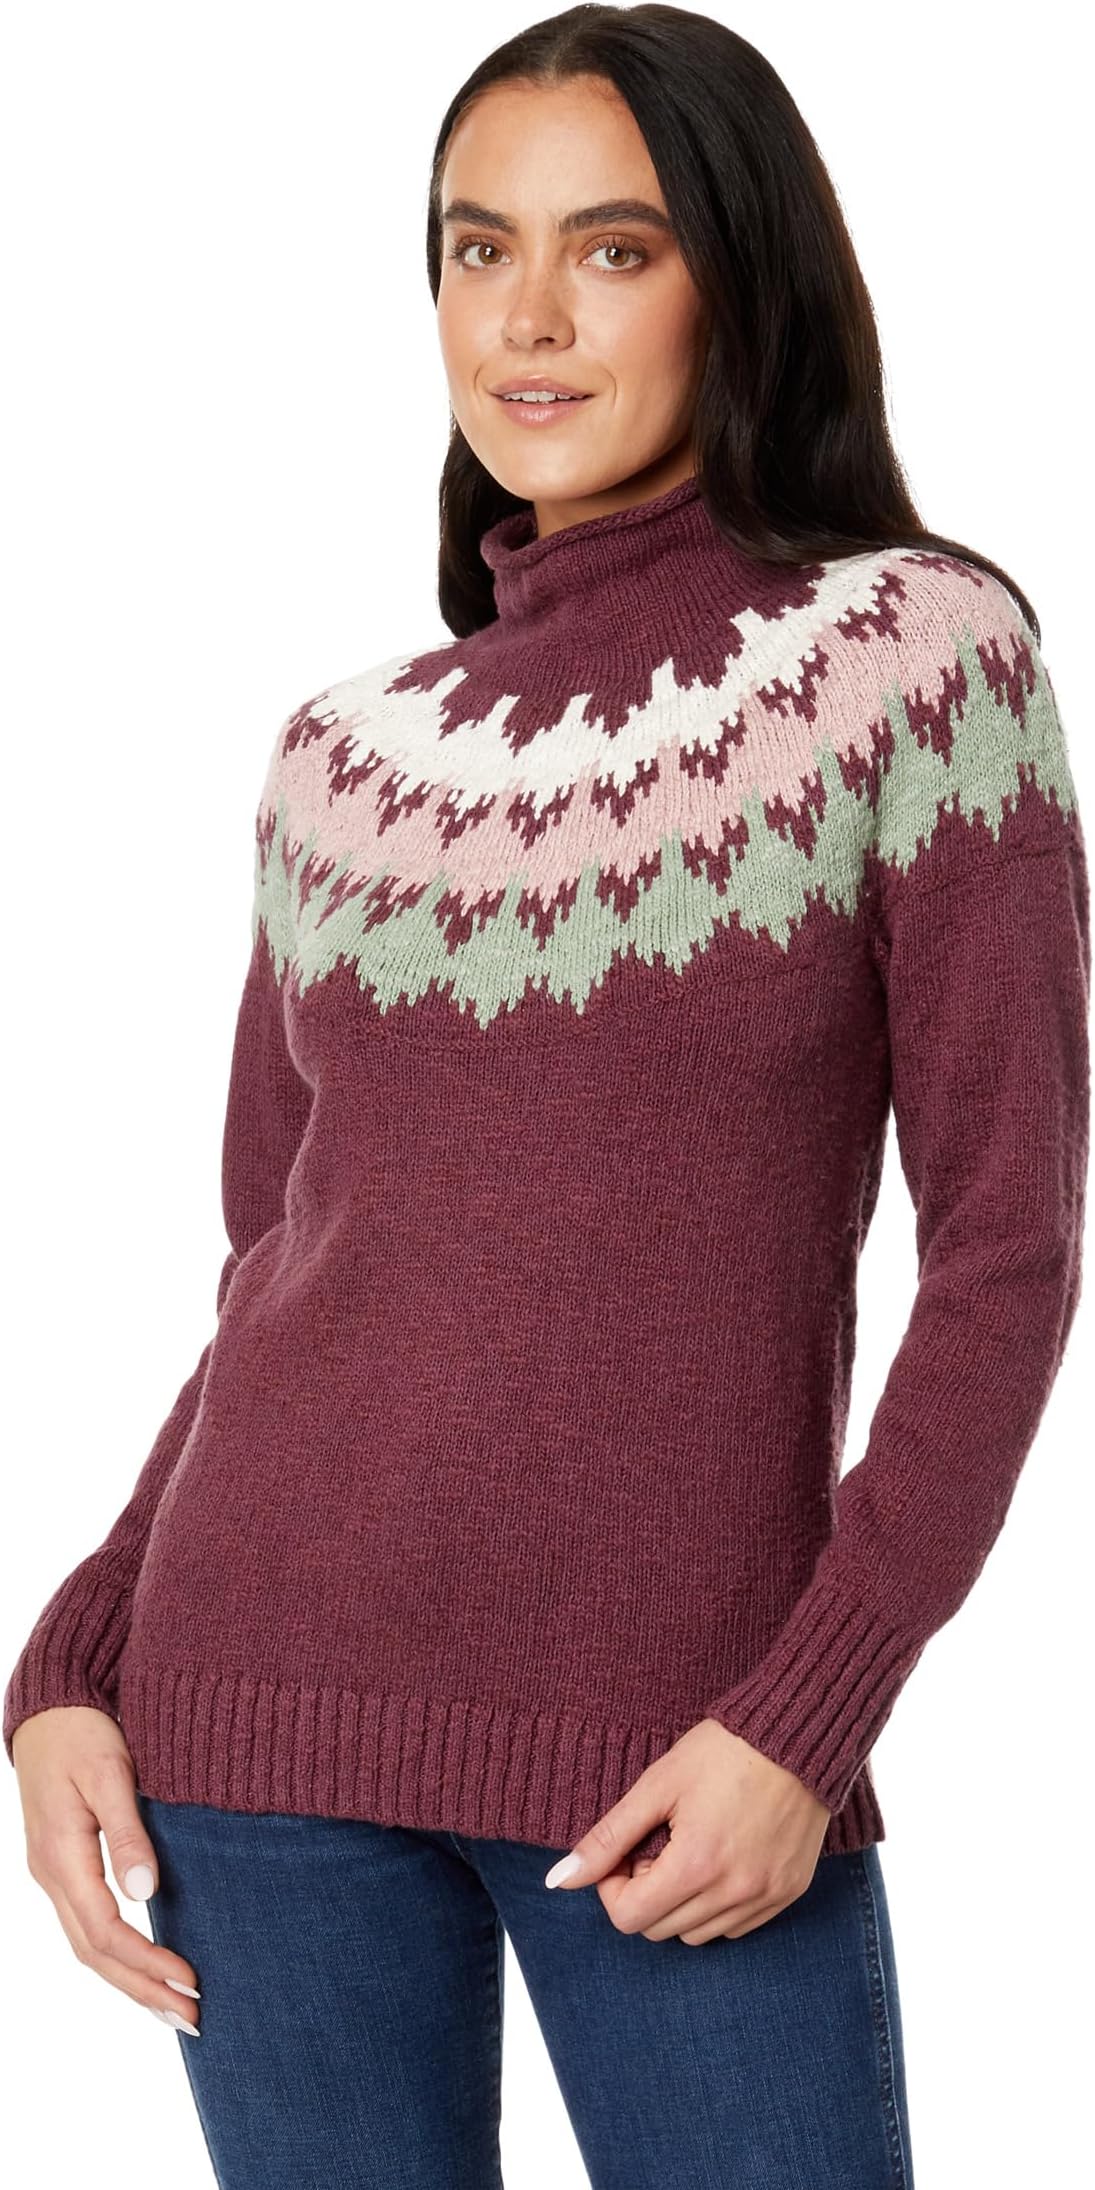 Хлопковый свитер Ragg, пуловер с воротником-воронкой Fair Isle L.L.Bean, цвет Deep Wine Fair Isle